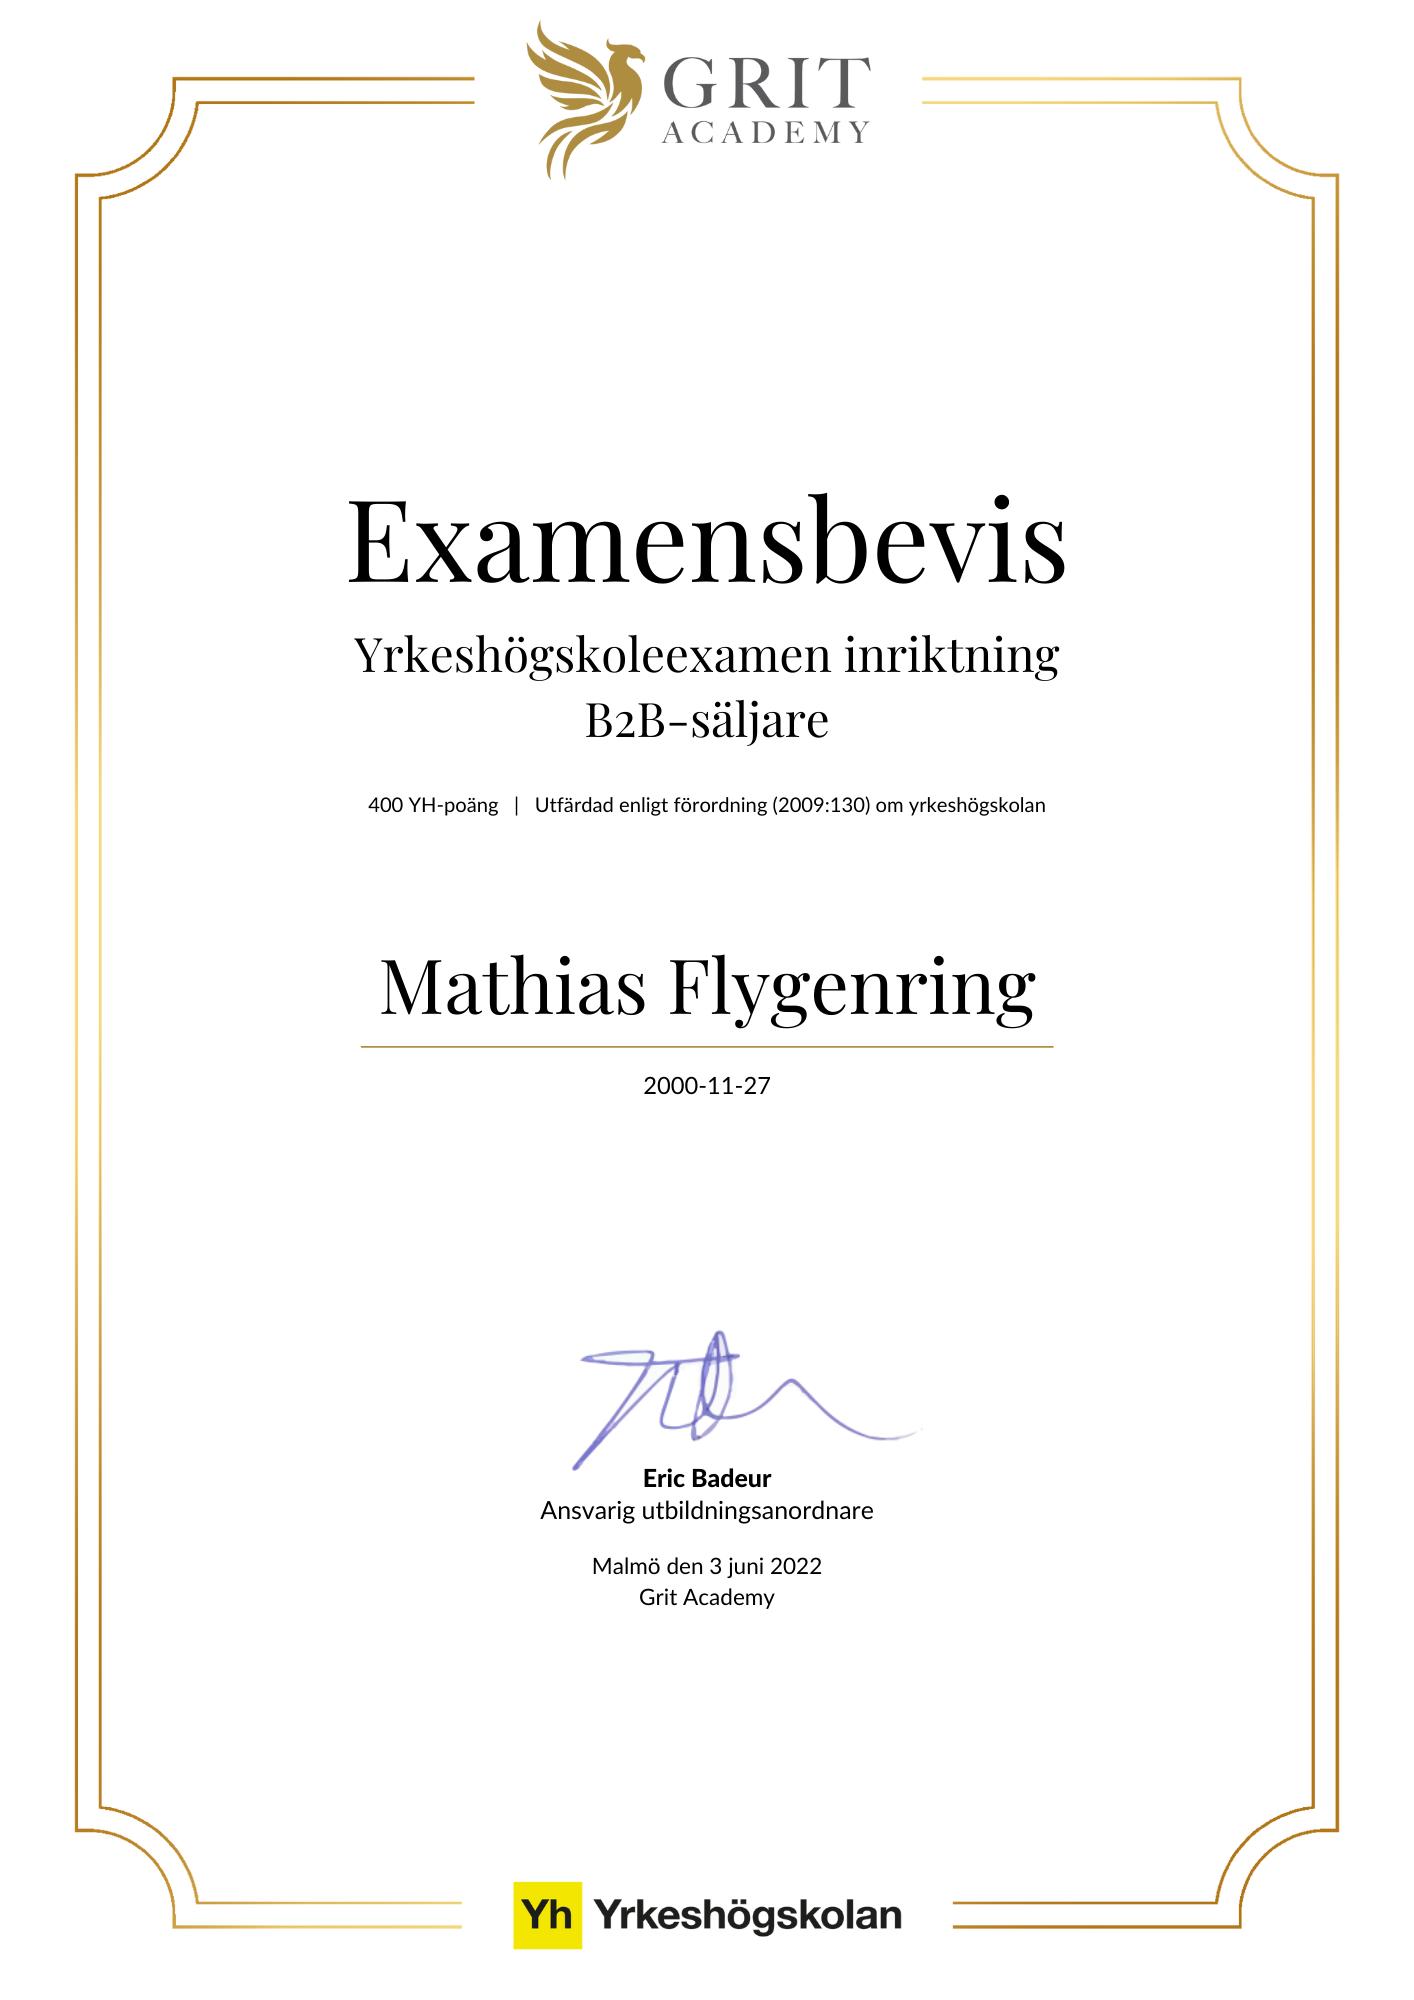 Examensbevis Mathias Flygenring